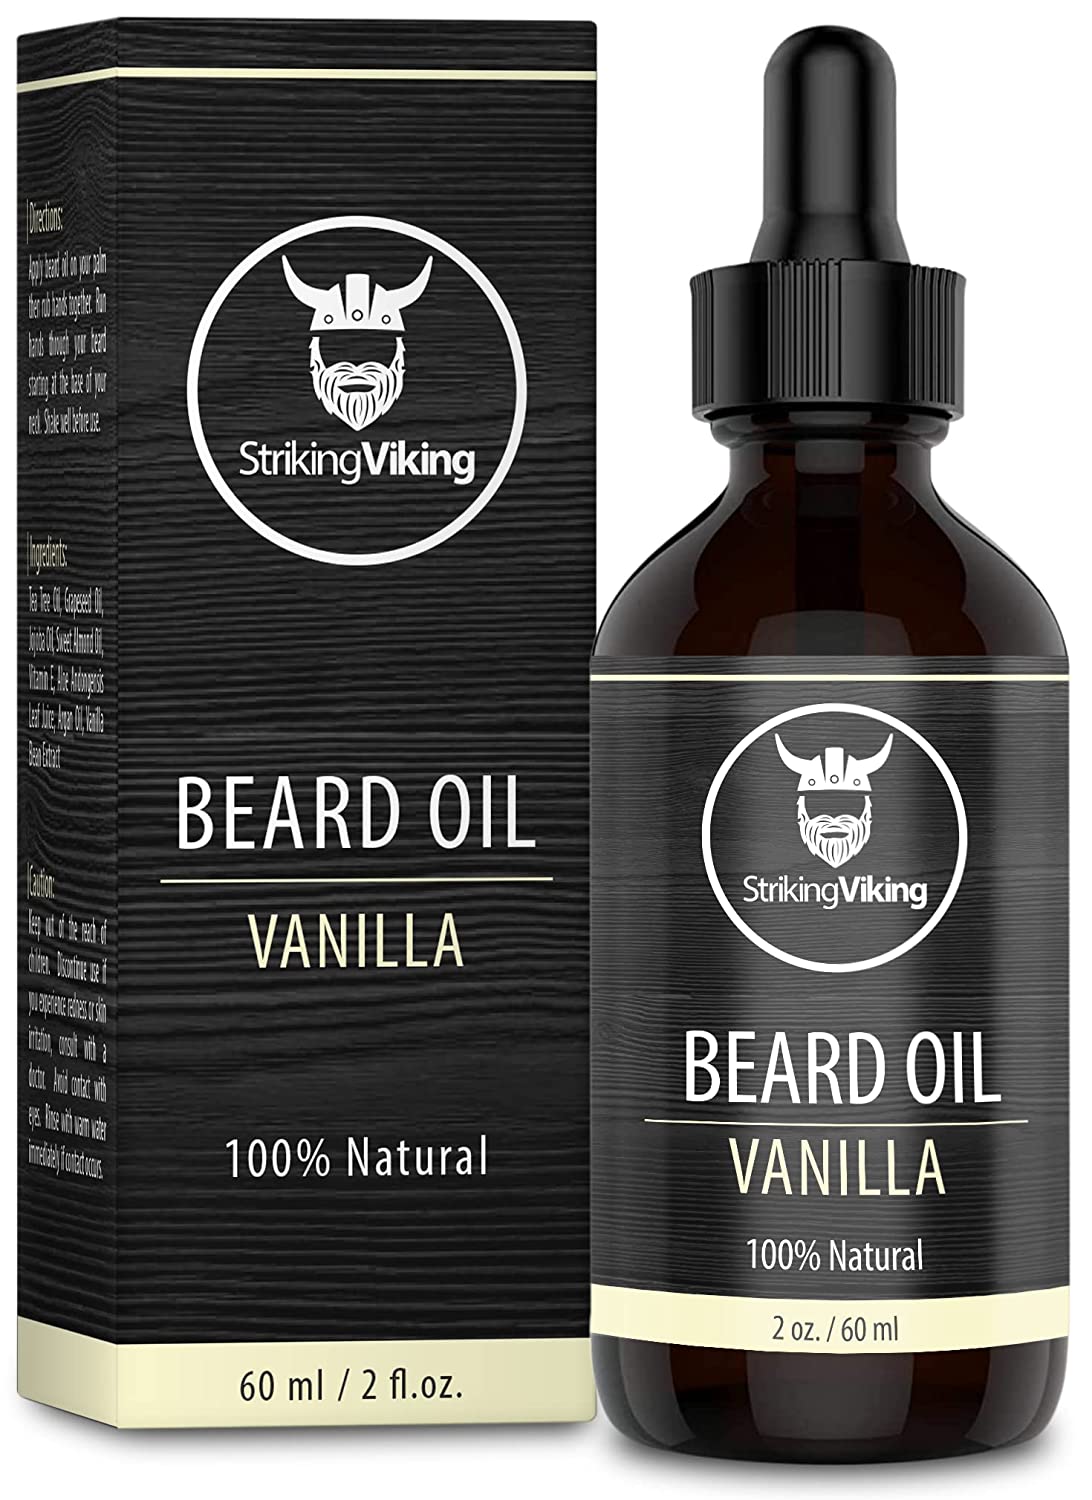 bob noun recommends 7 sins beard oil pic